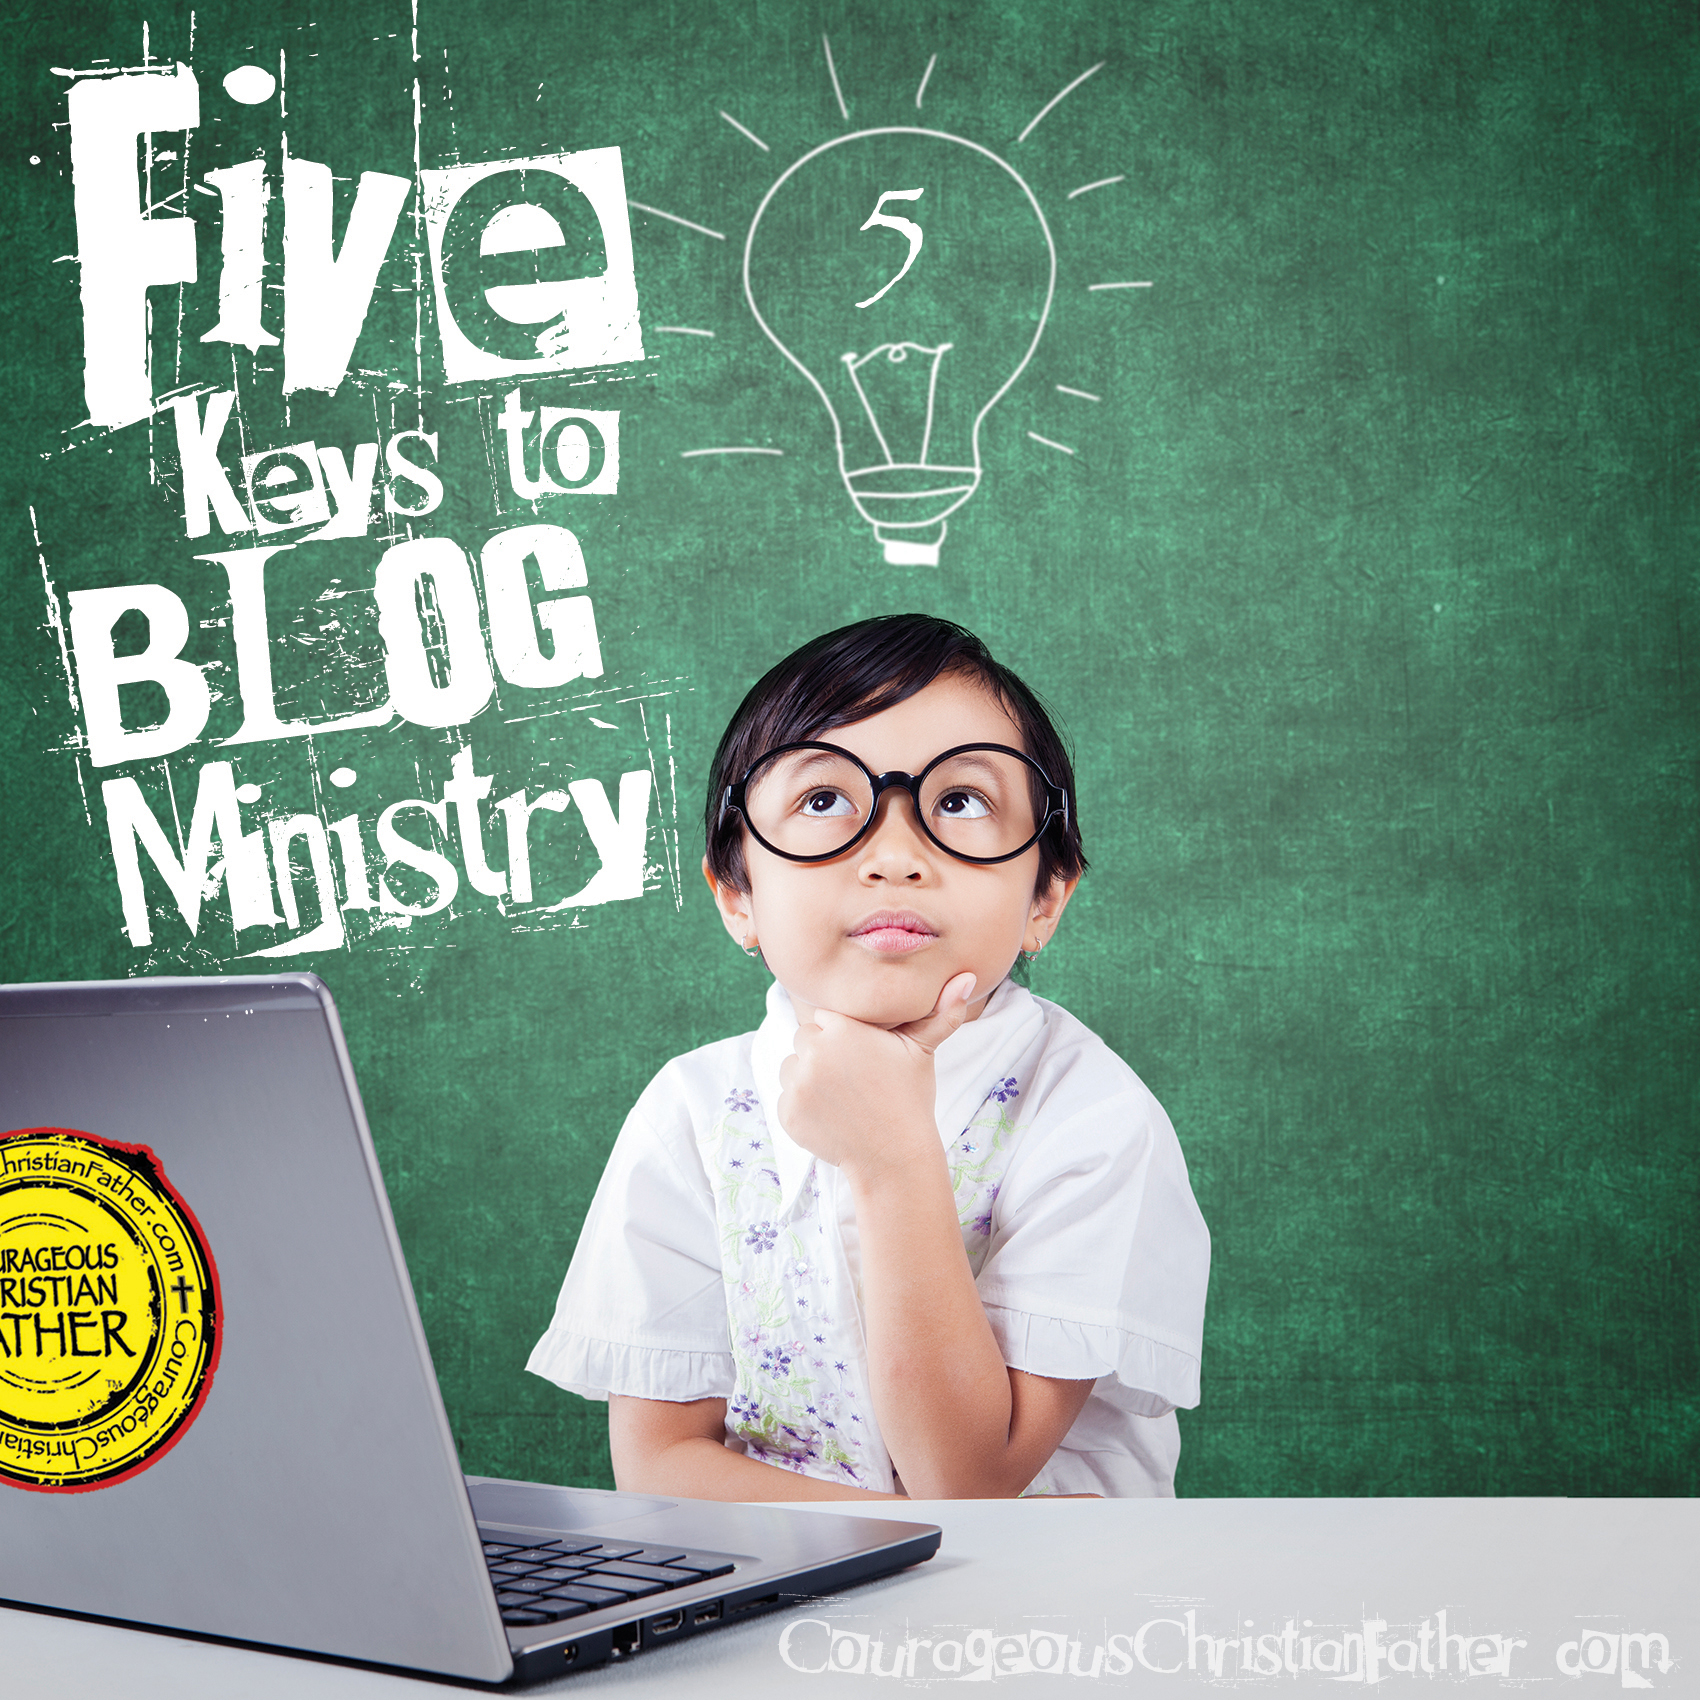 Five Keys to Blog Ministry